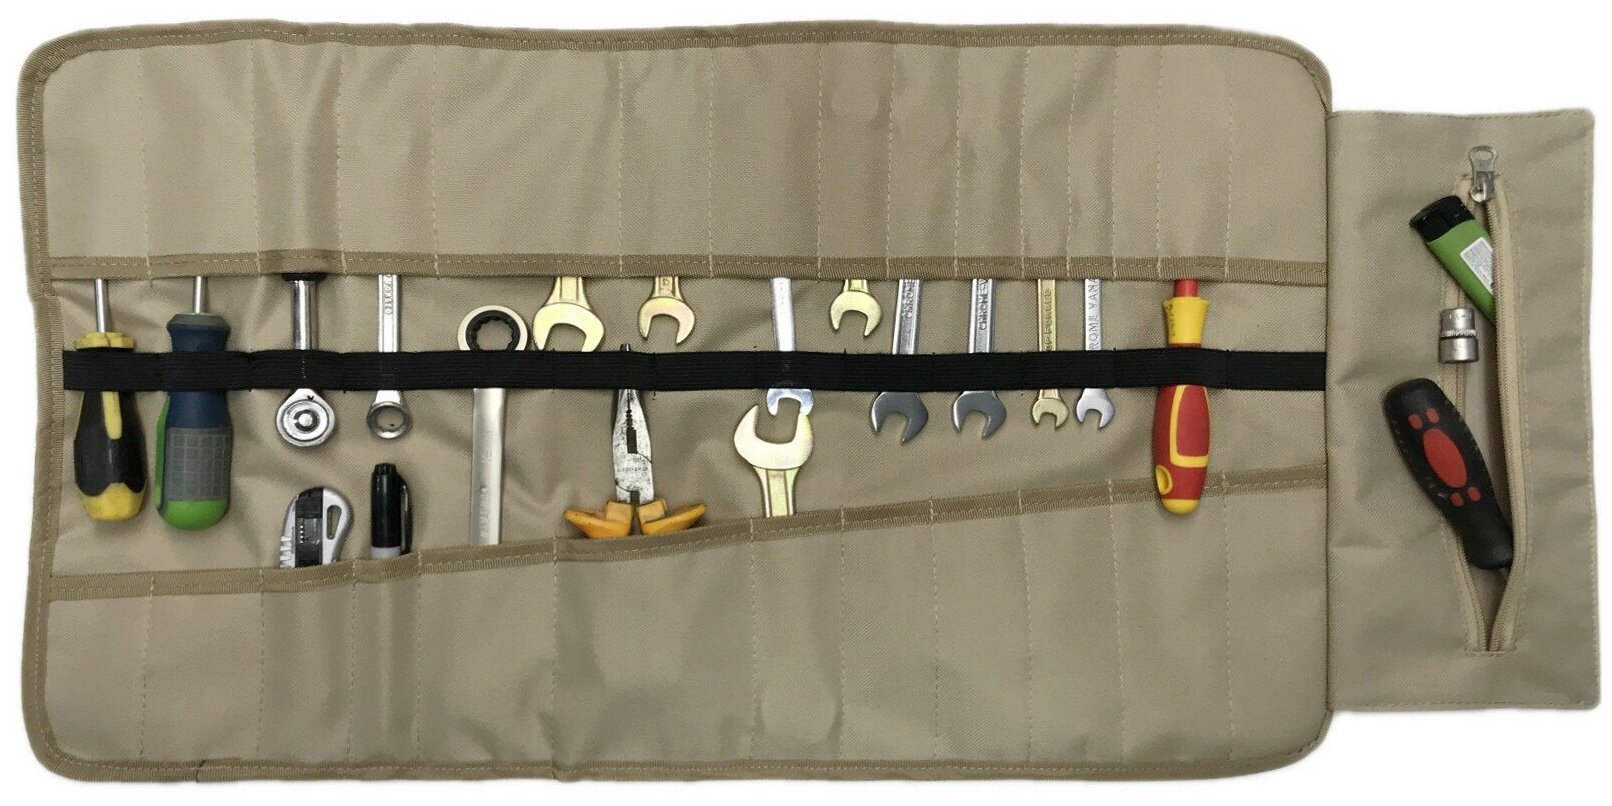 Сумка скрутка для инструмента AvtoPoryadok скатка с ремнями размер 58 х 35 х 10 см бежевая. - фотография № 1